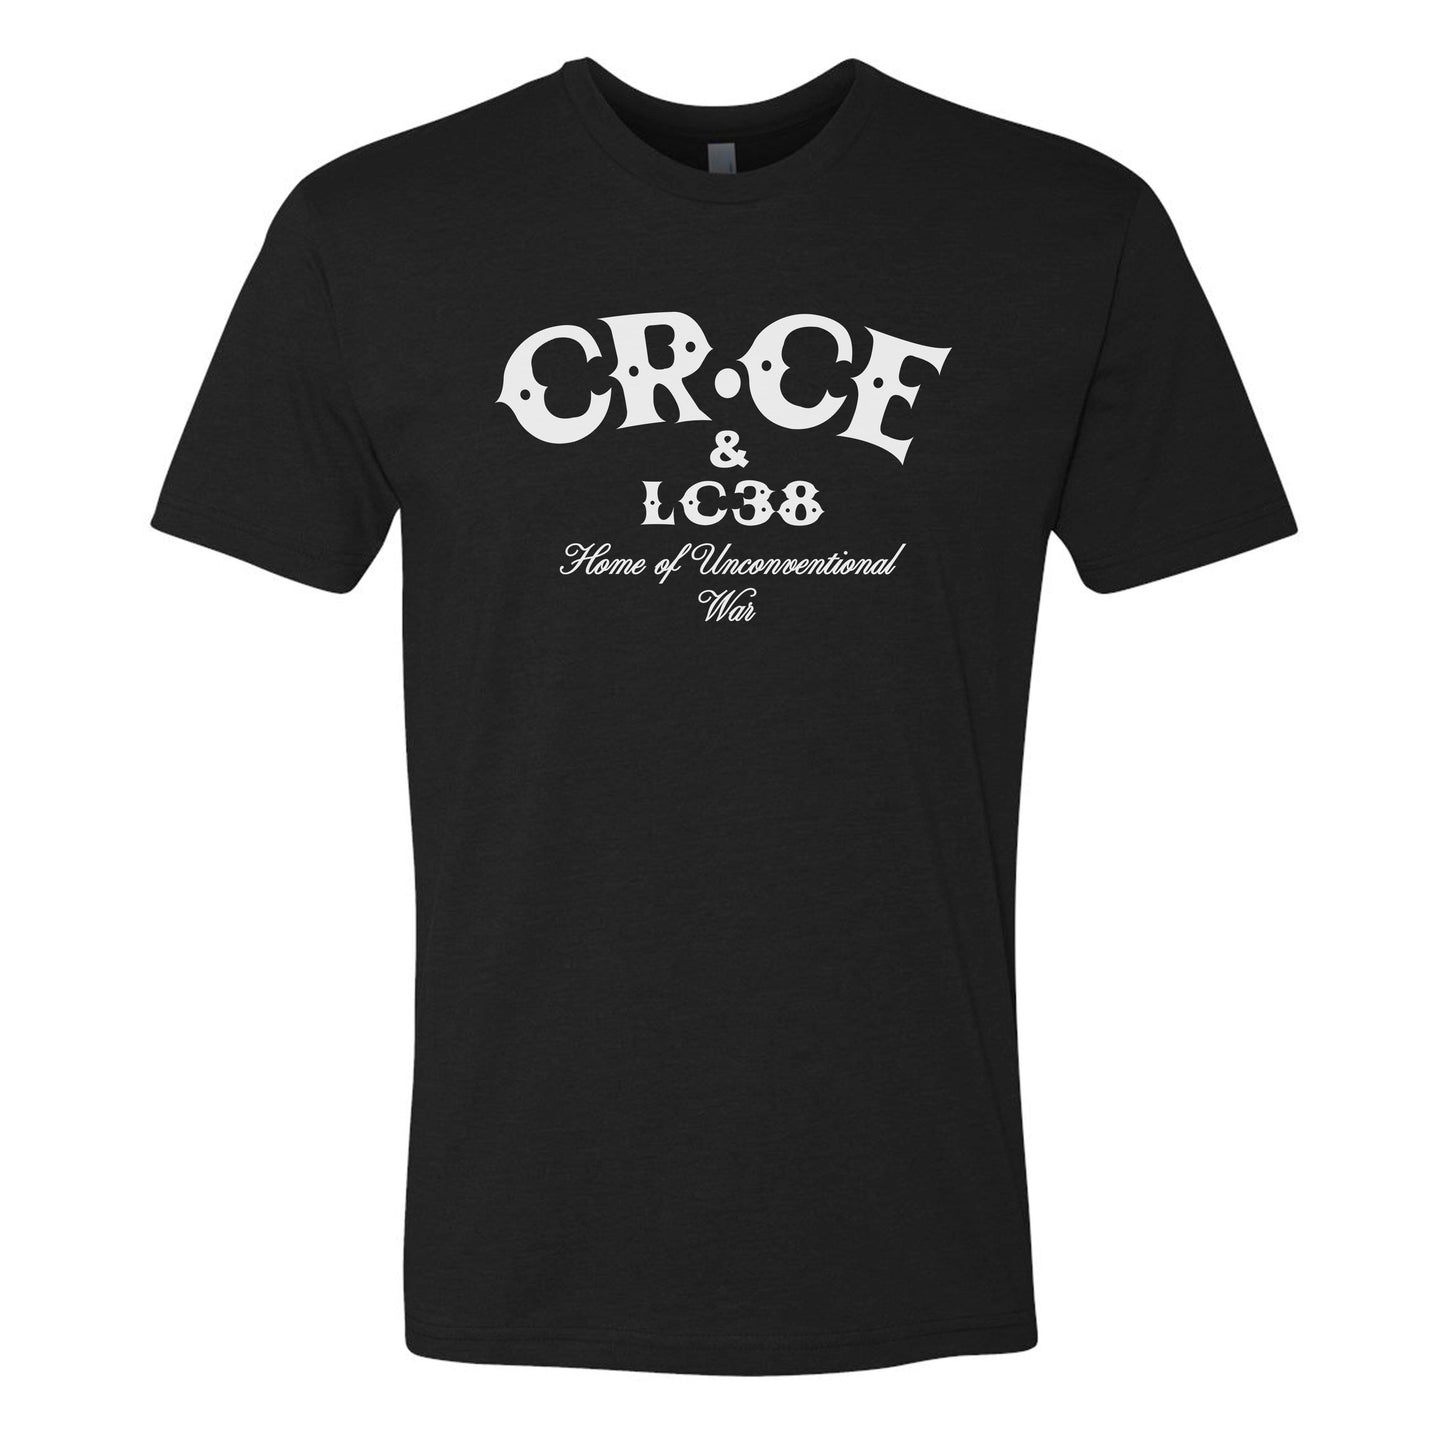 CBGB's shirt